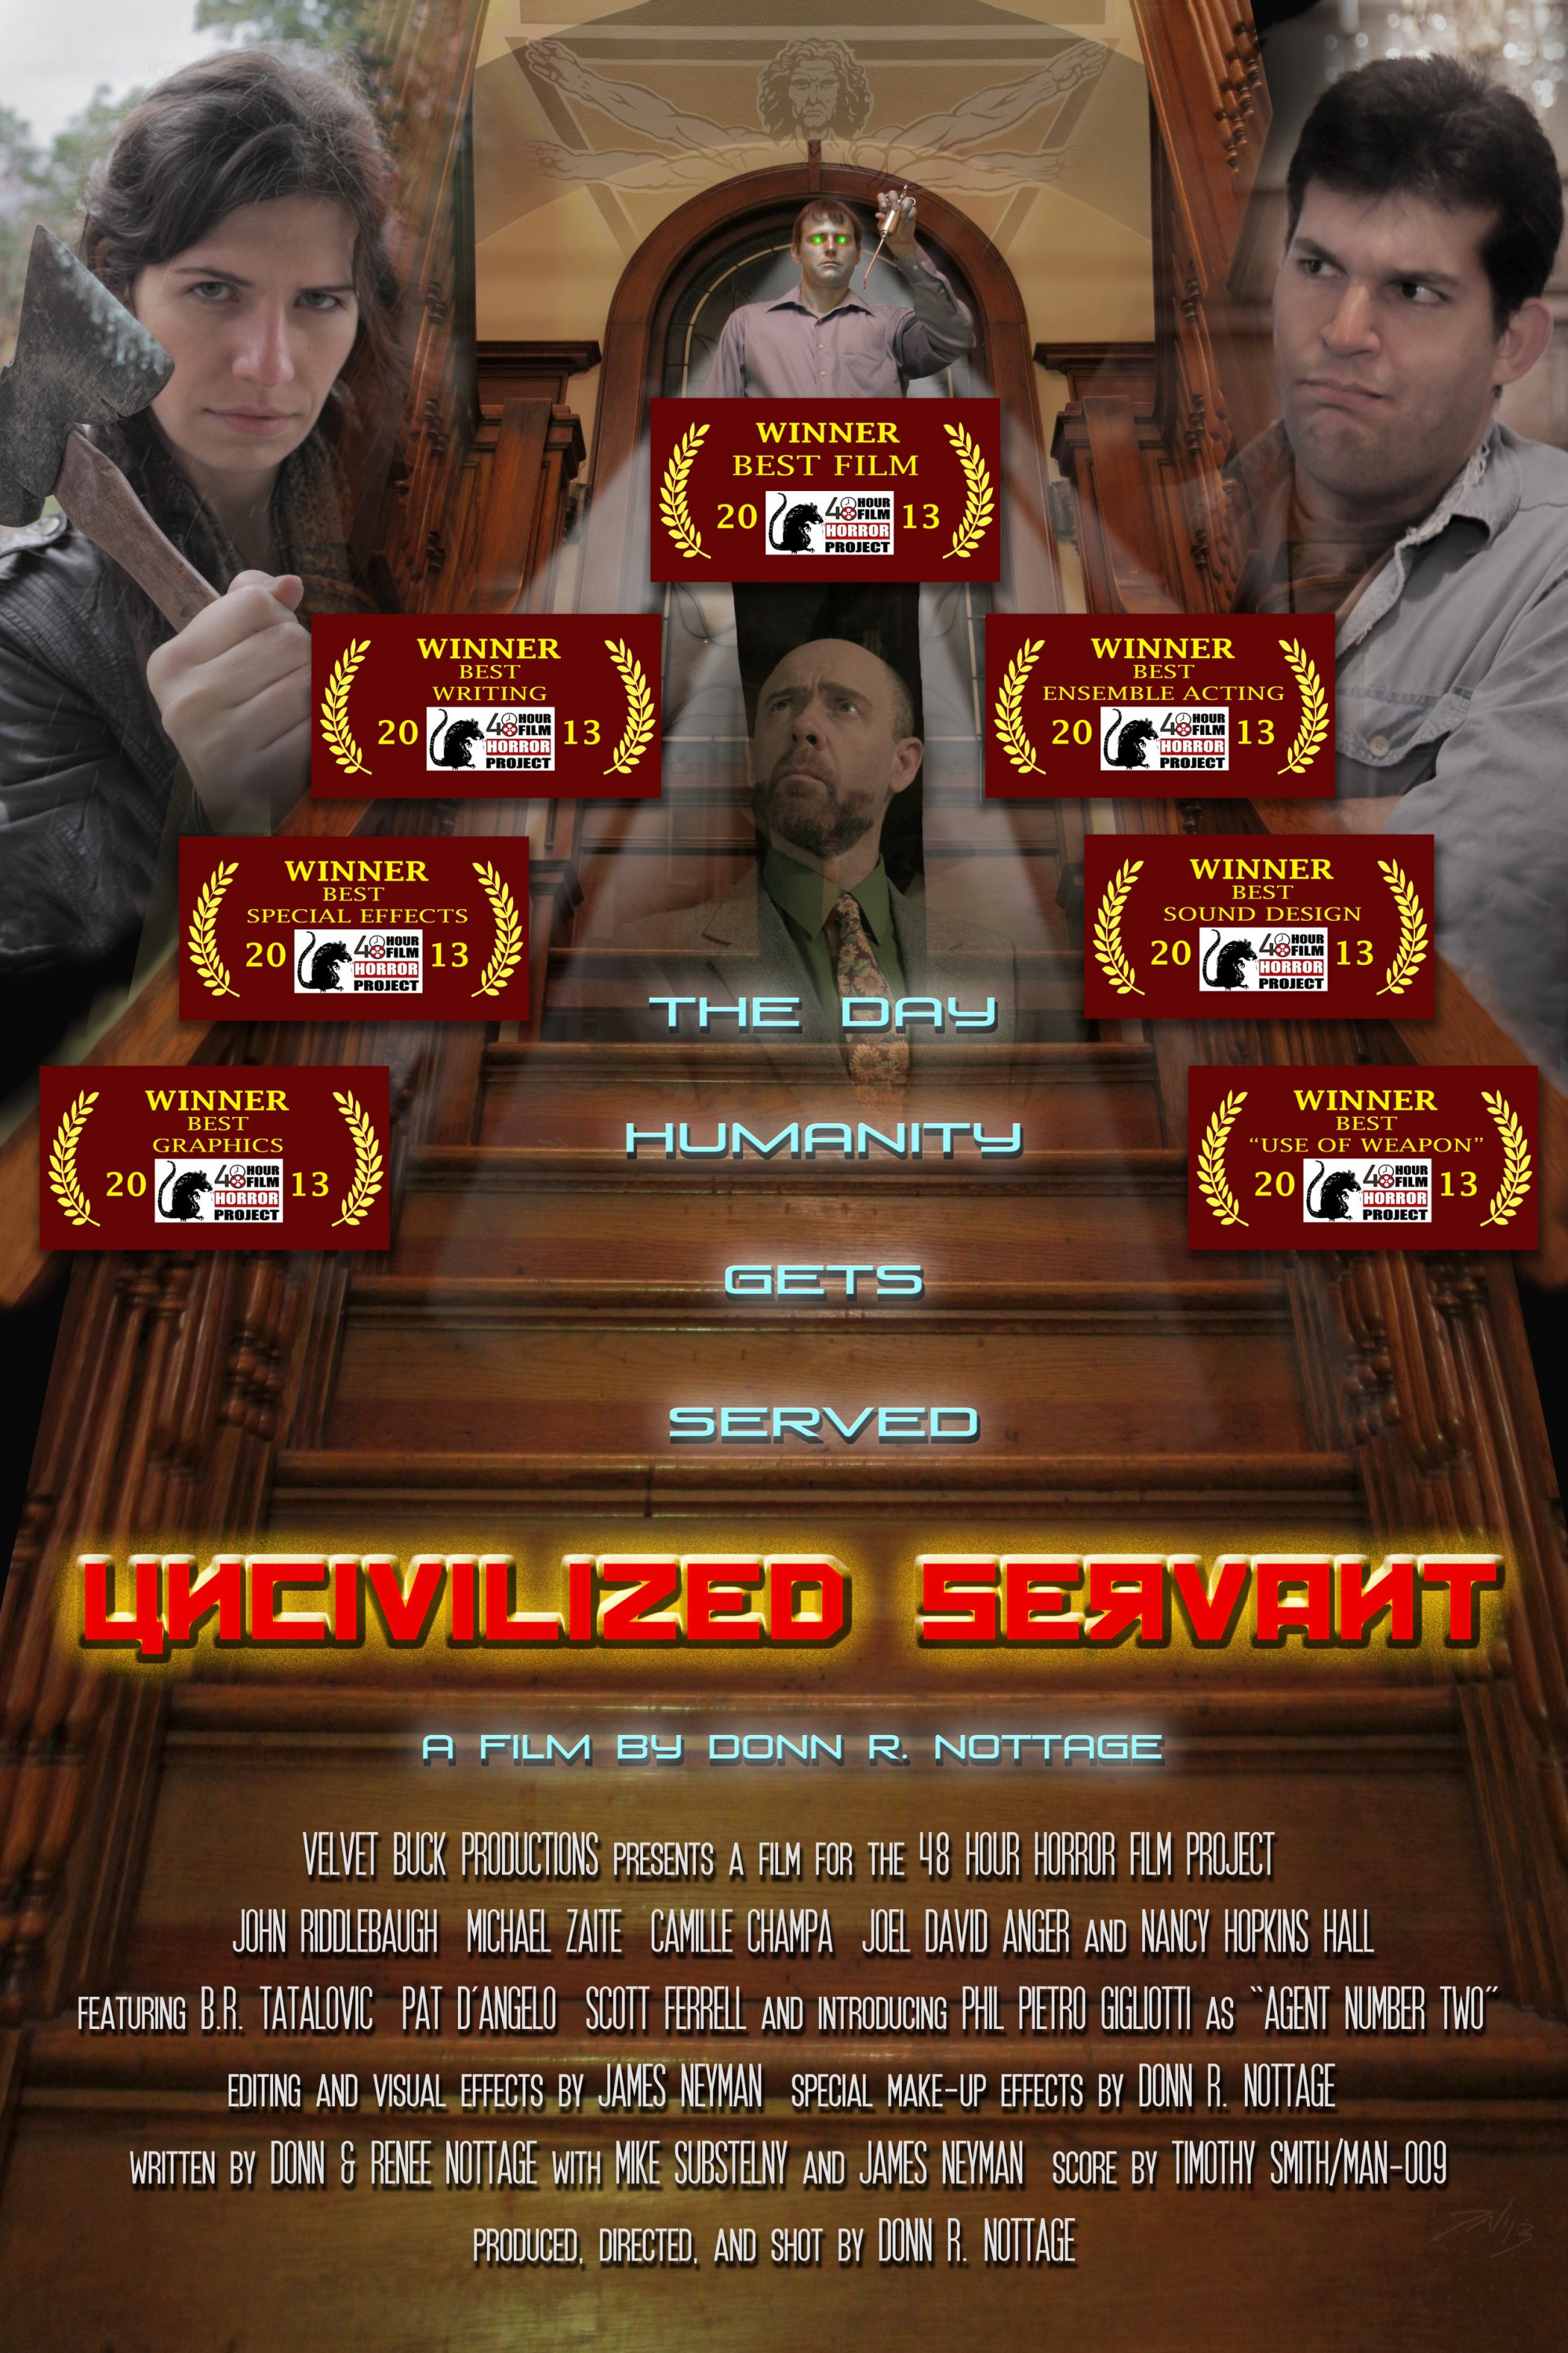 Mega Sized Movie Poster Image for Uncivilized Servant